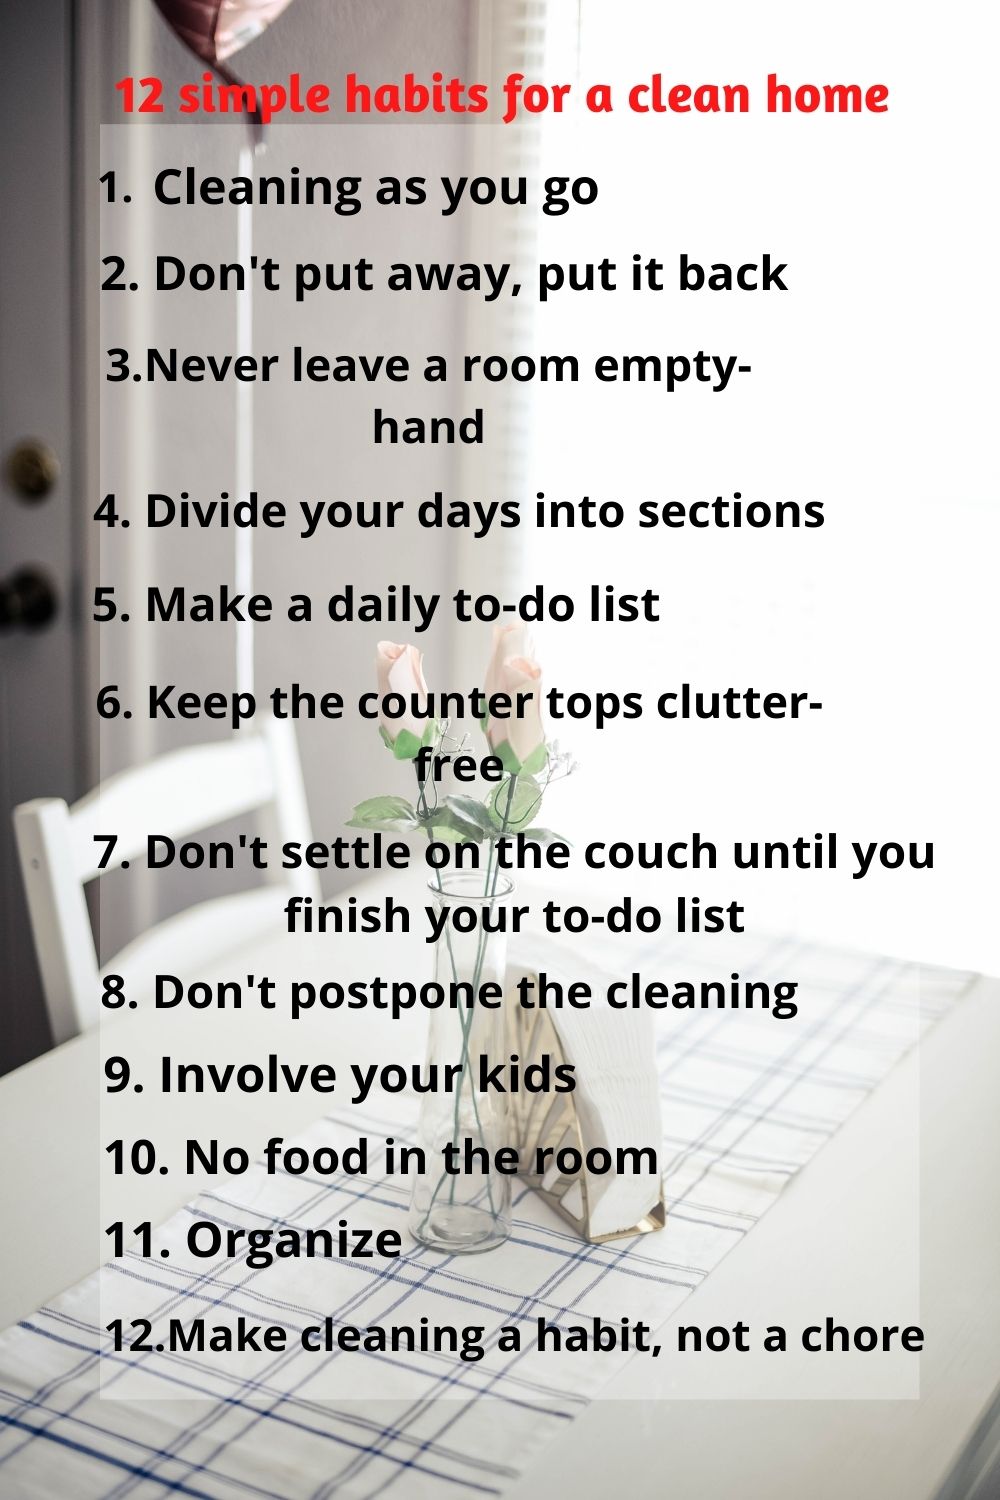 https://mothersgurukul.com/wp-content/uploads/2021/06/12-simple-habits-for-a-clean-home-list-1.jpg